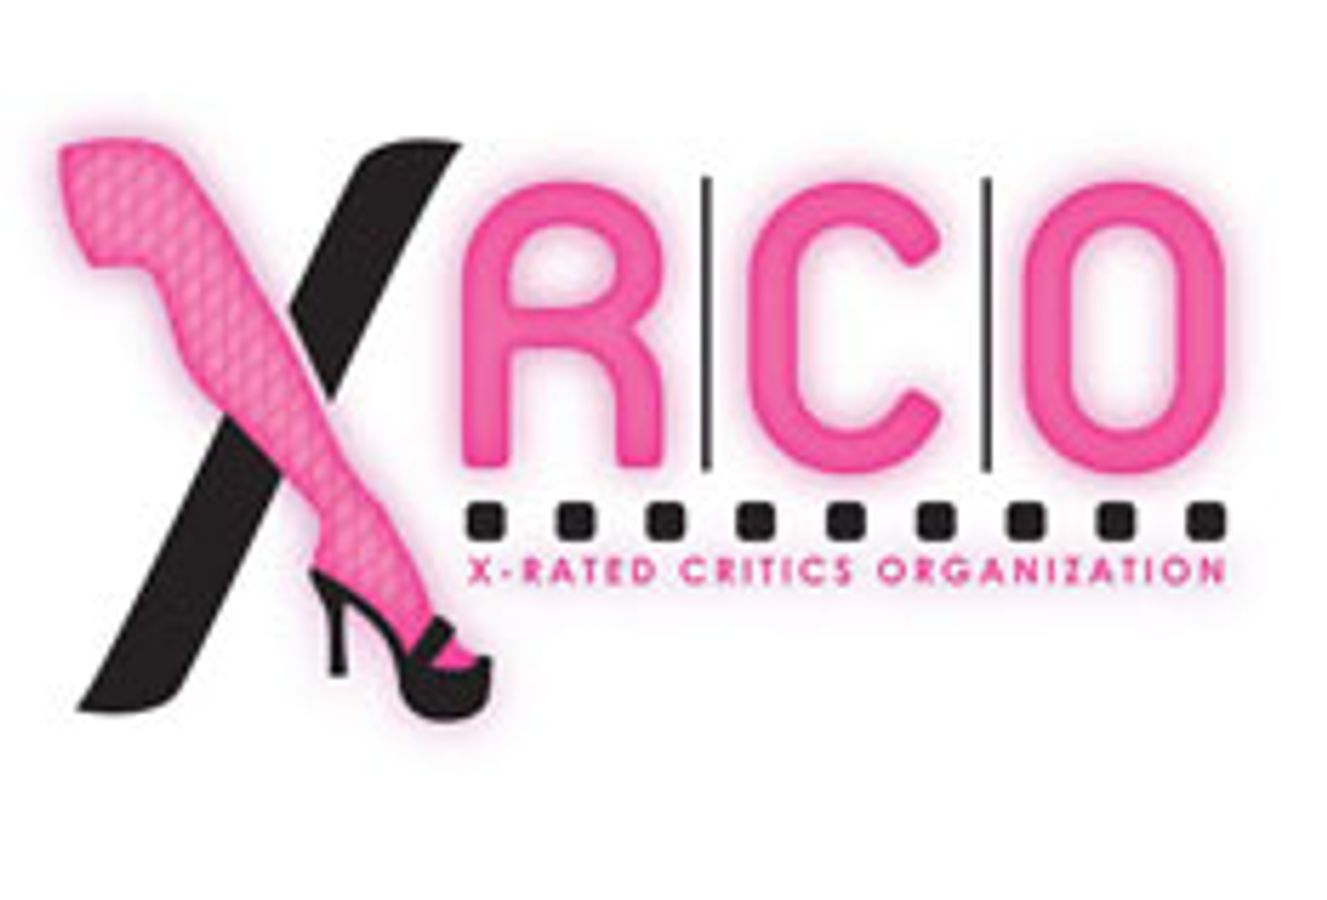 X-Rated Critics Organization (XRCO)